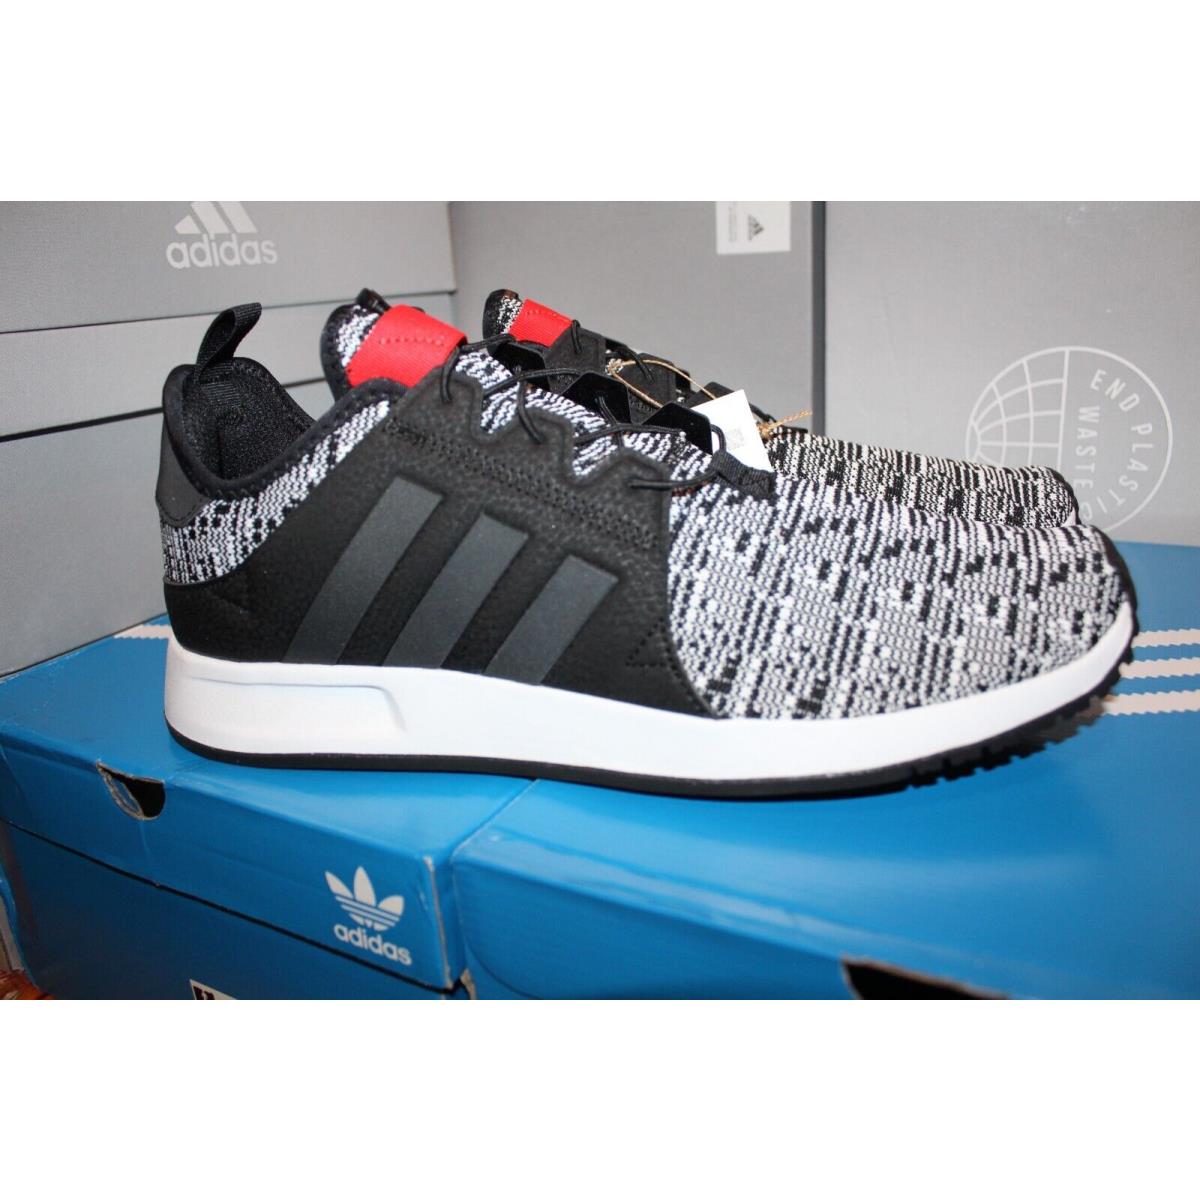 Adidas shoes ORIGINALS XPLR TREFOIL - Black 2